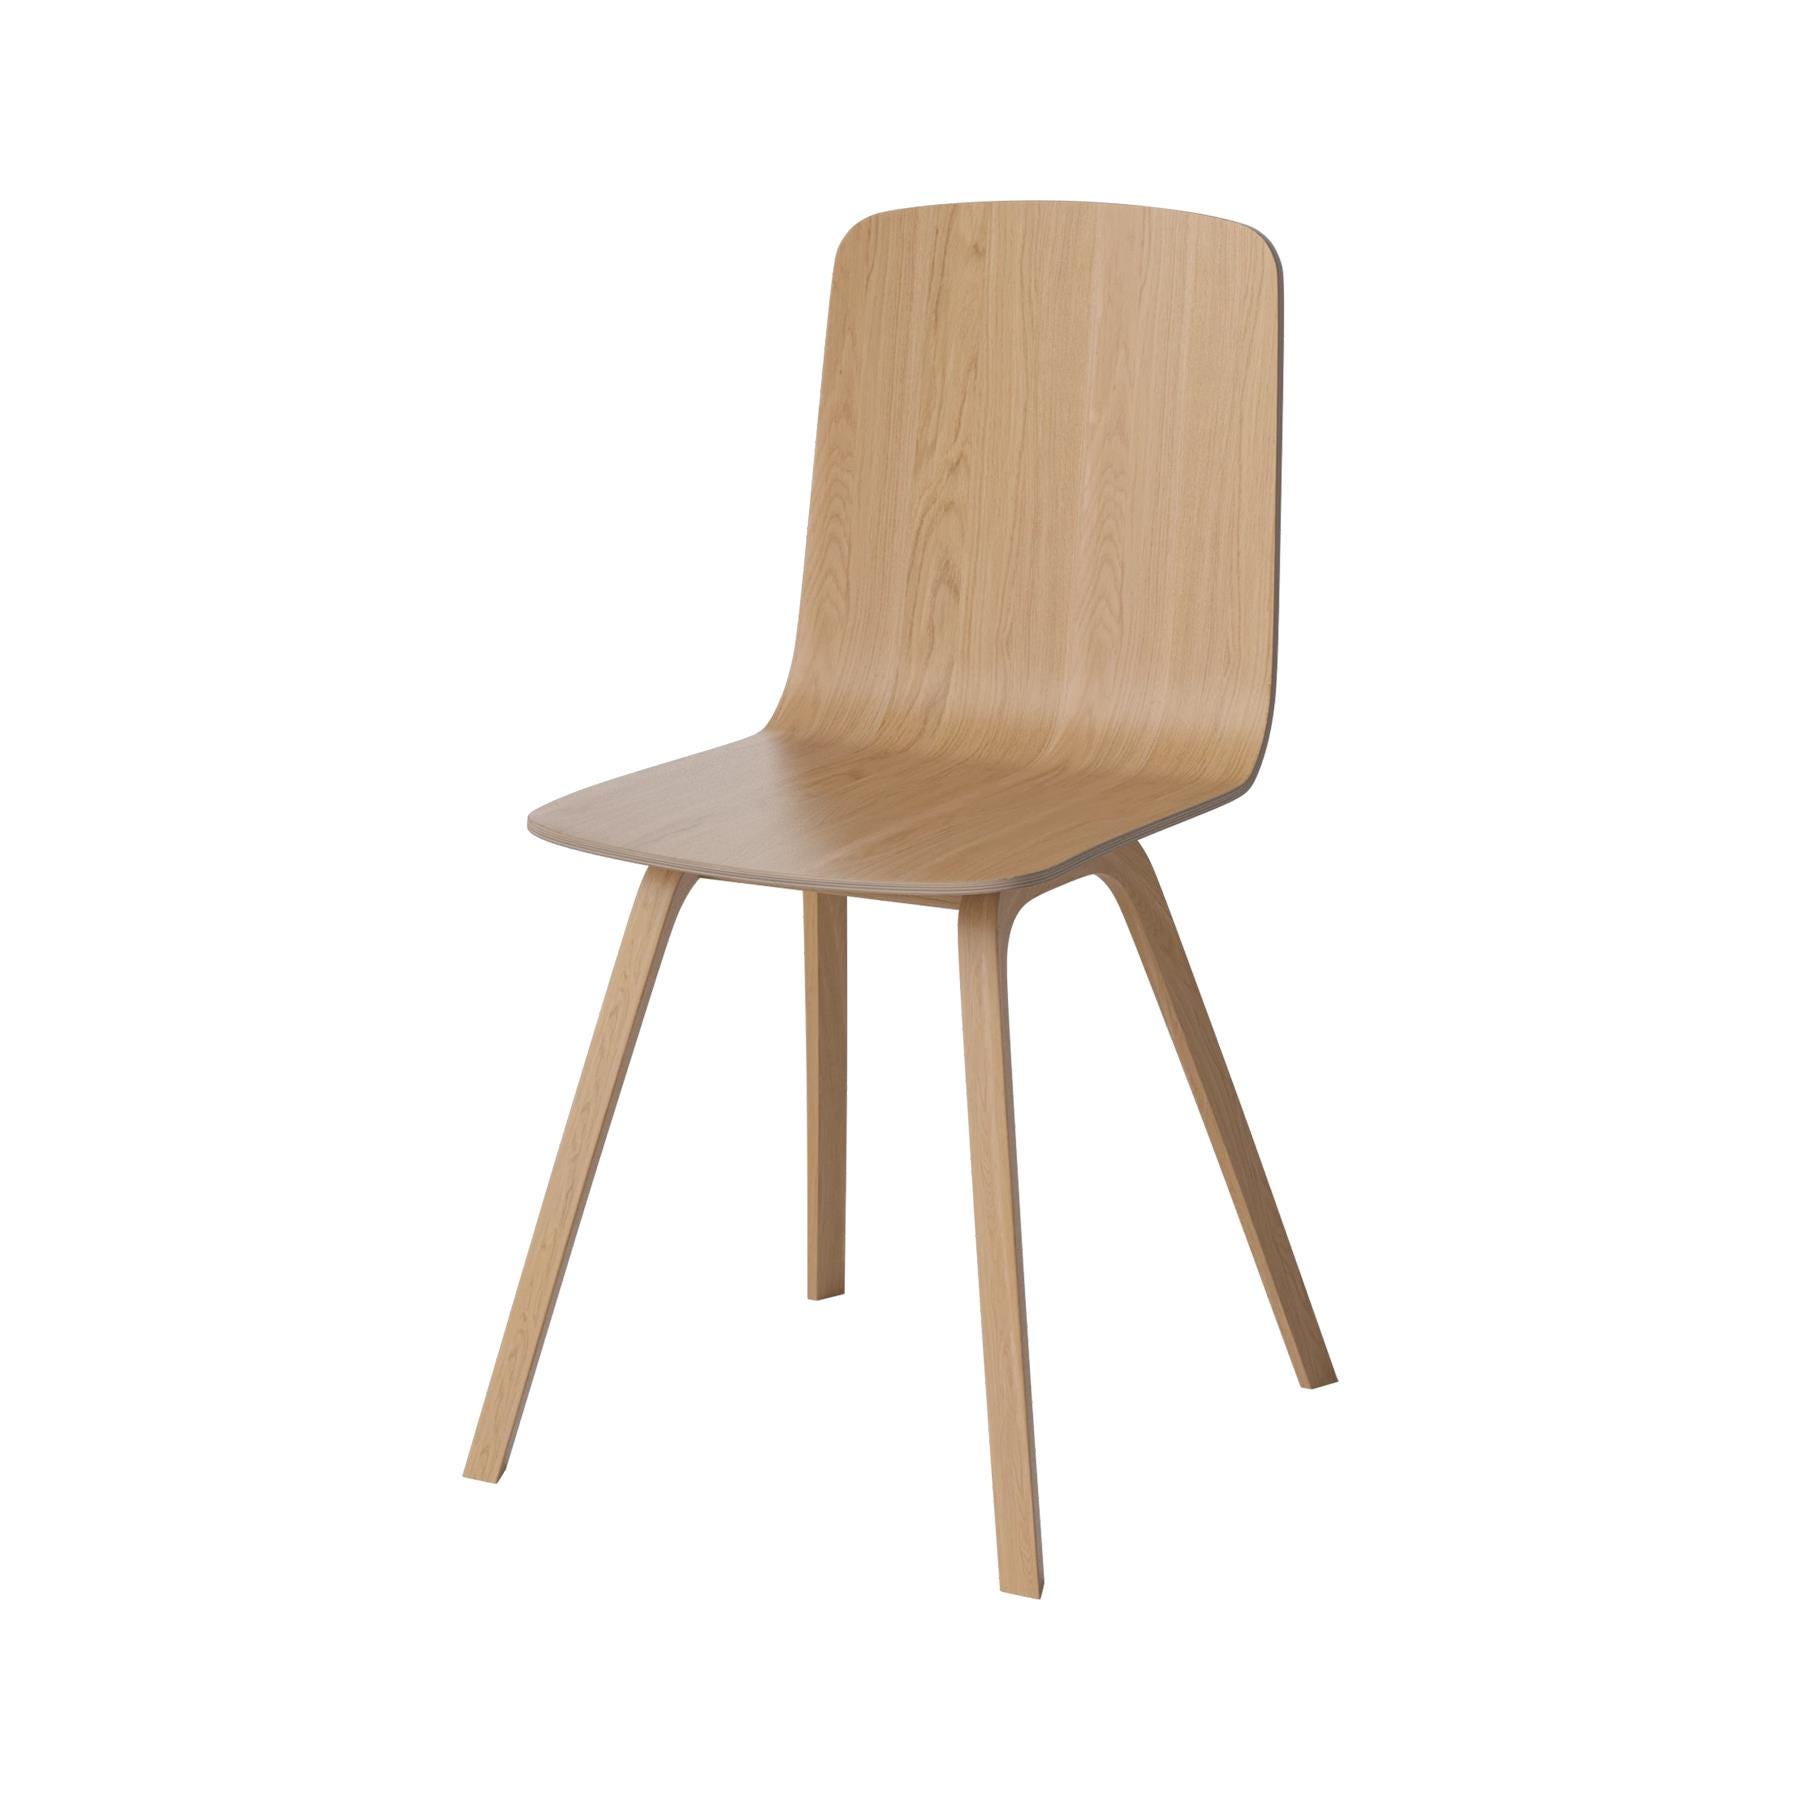 Bolia Palm Dining Chair Wood Veneer Legs Oiled Oak Light Wood Designer Furniture From Holloways Of Ludlow